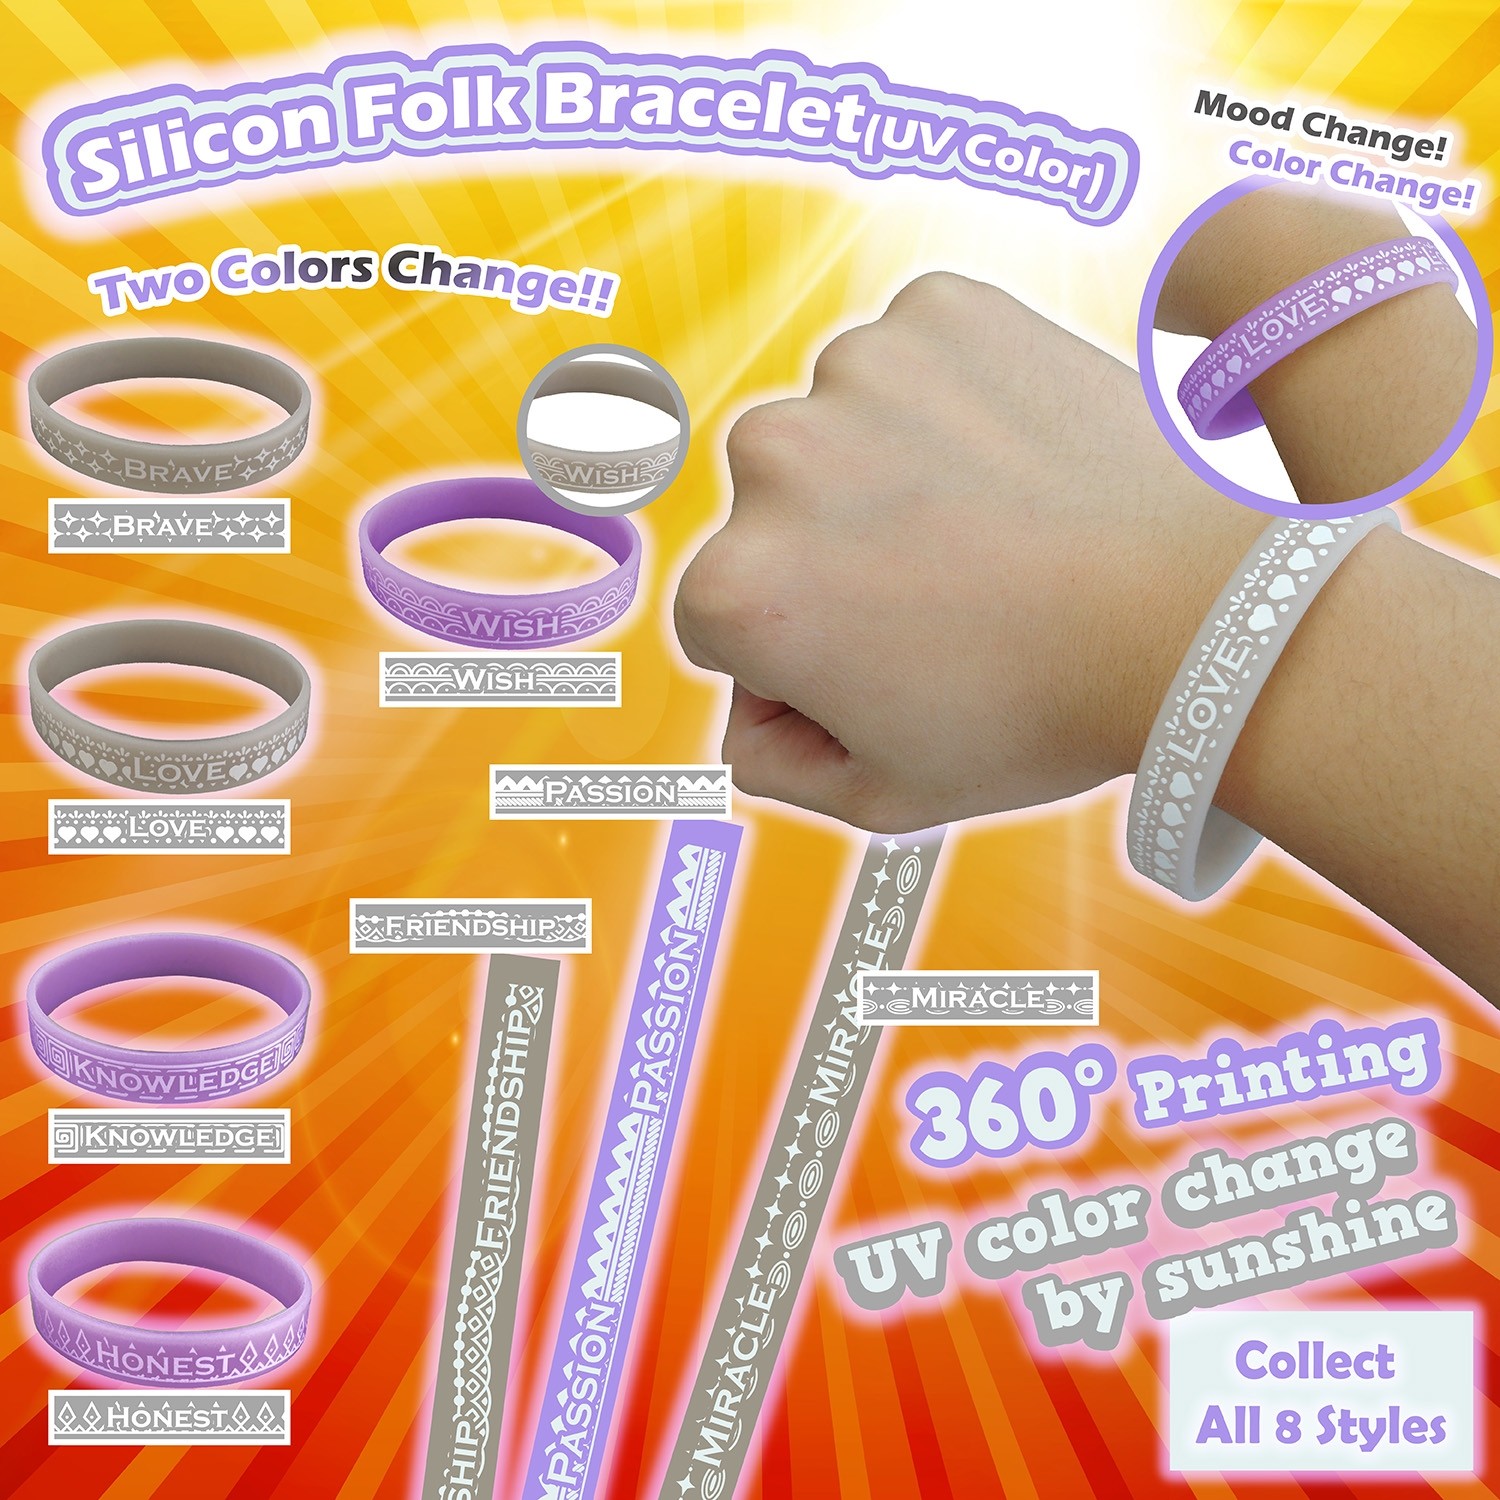 Silicon Folk Bracelet - UV color